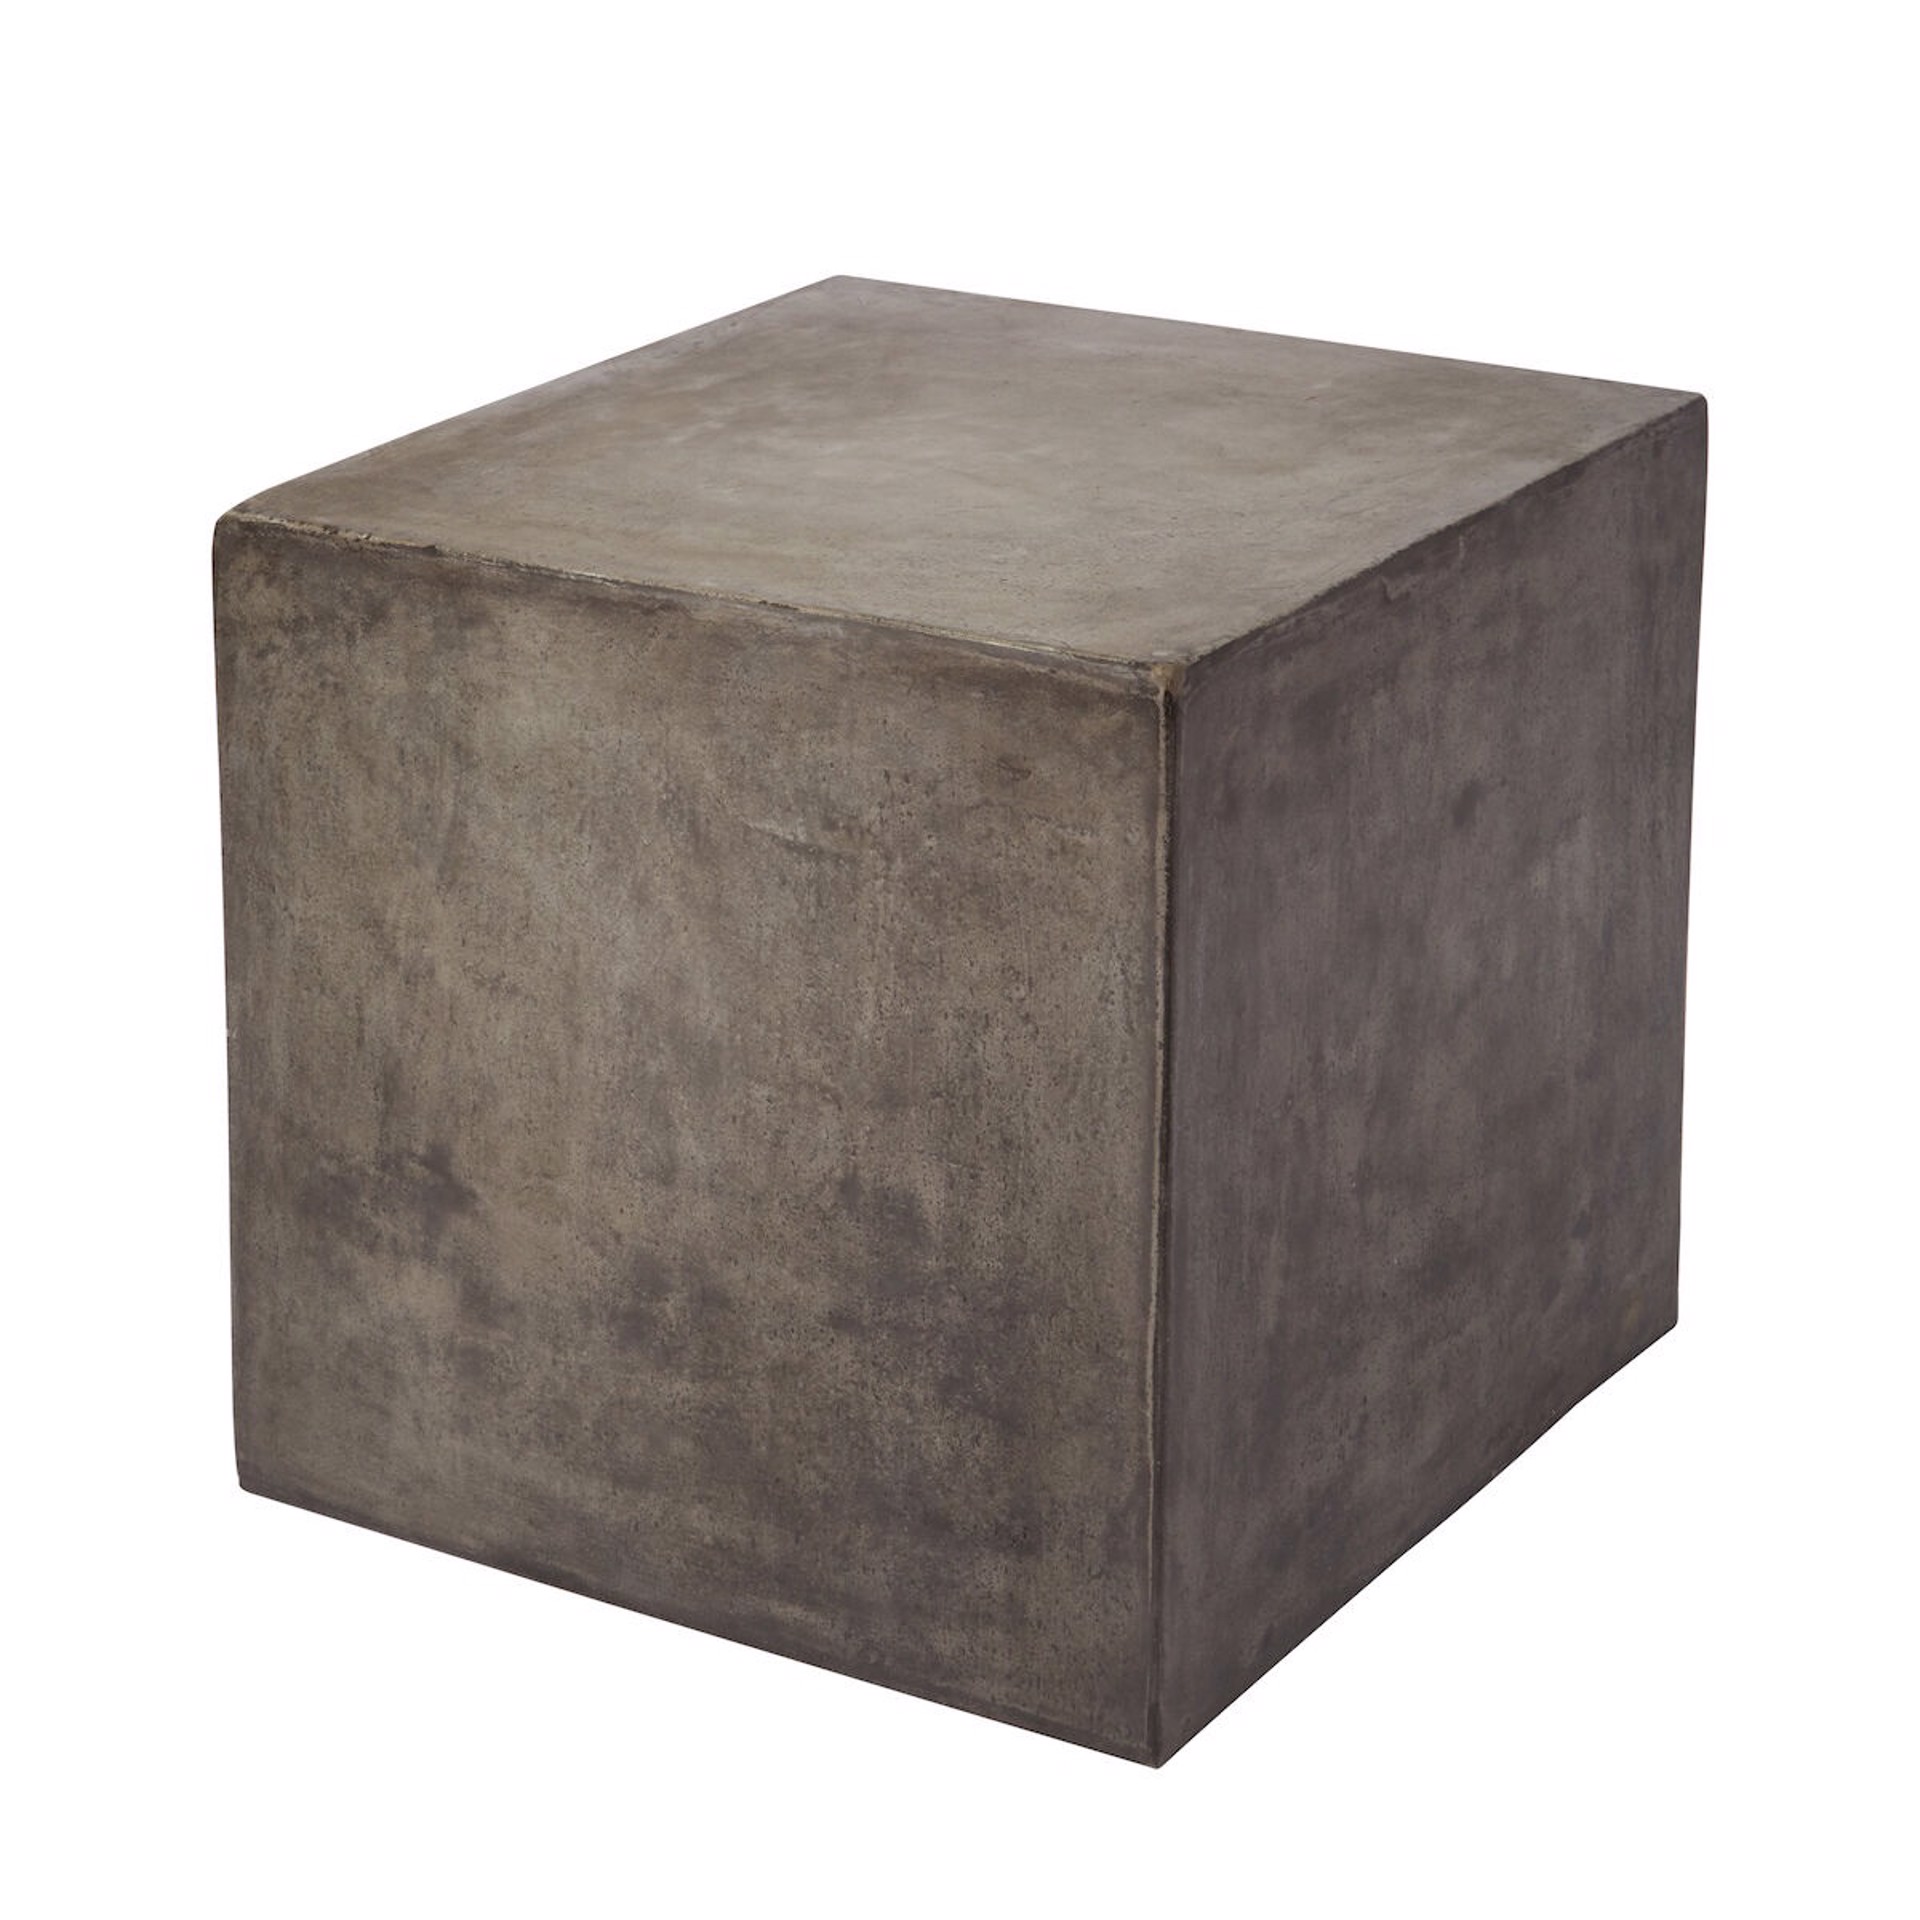 Concrete Pedestal - Large by Indigo Desert Ranch - Furniture